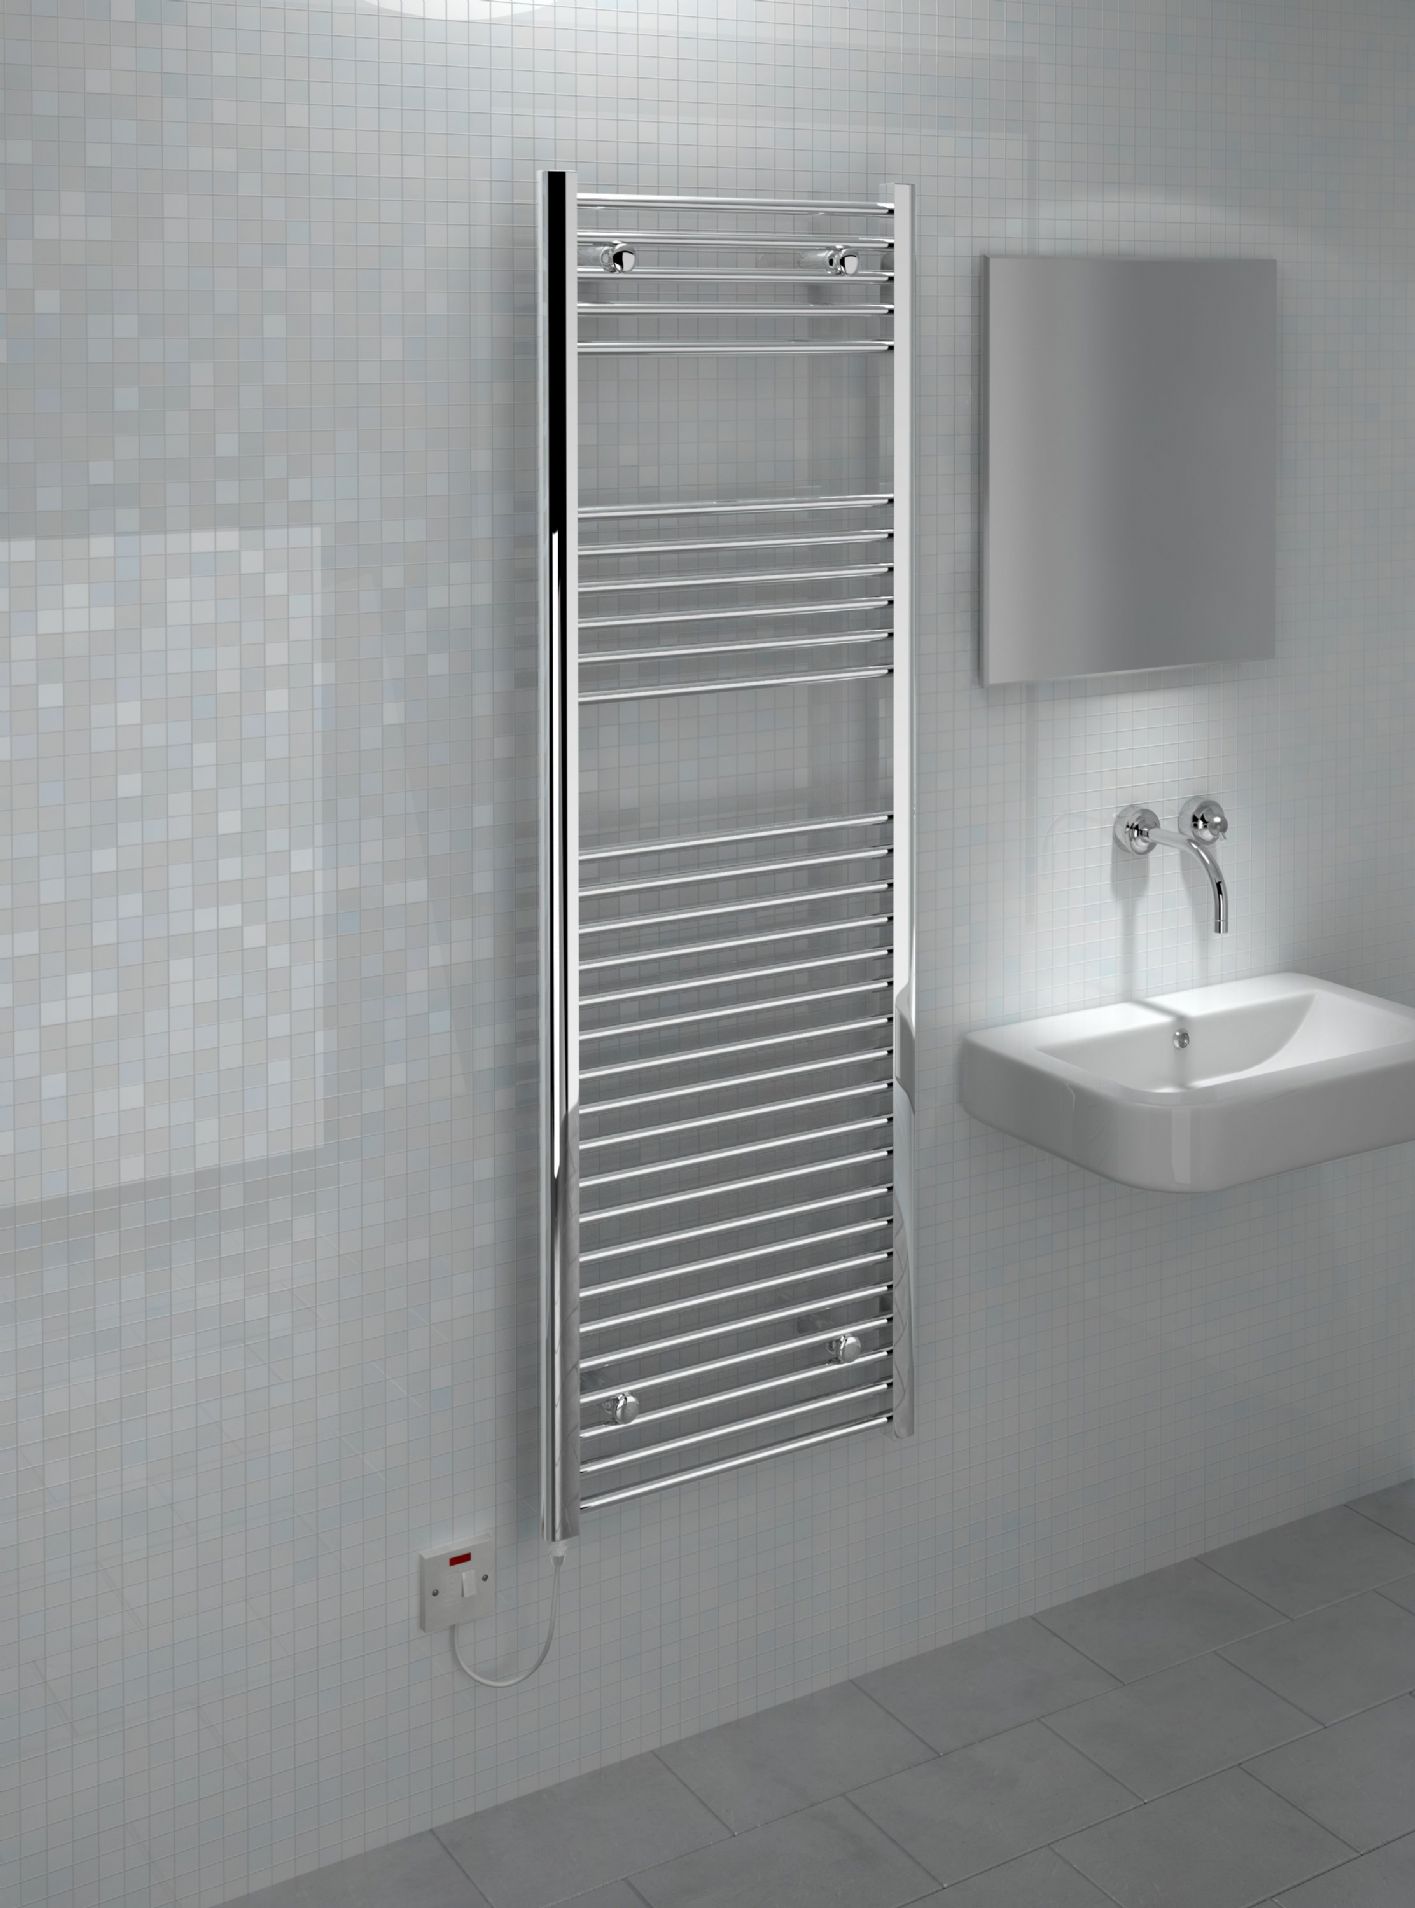 Kudox Electric Towel Rail Chrome 400W (500 x 1500mm) - Heating Bargains Online Shop